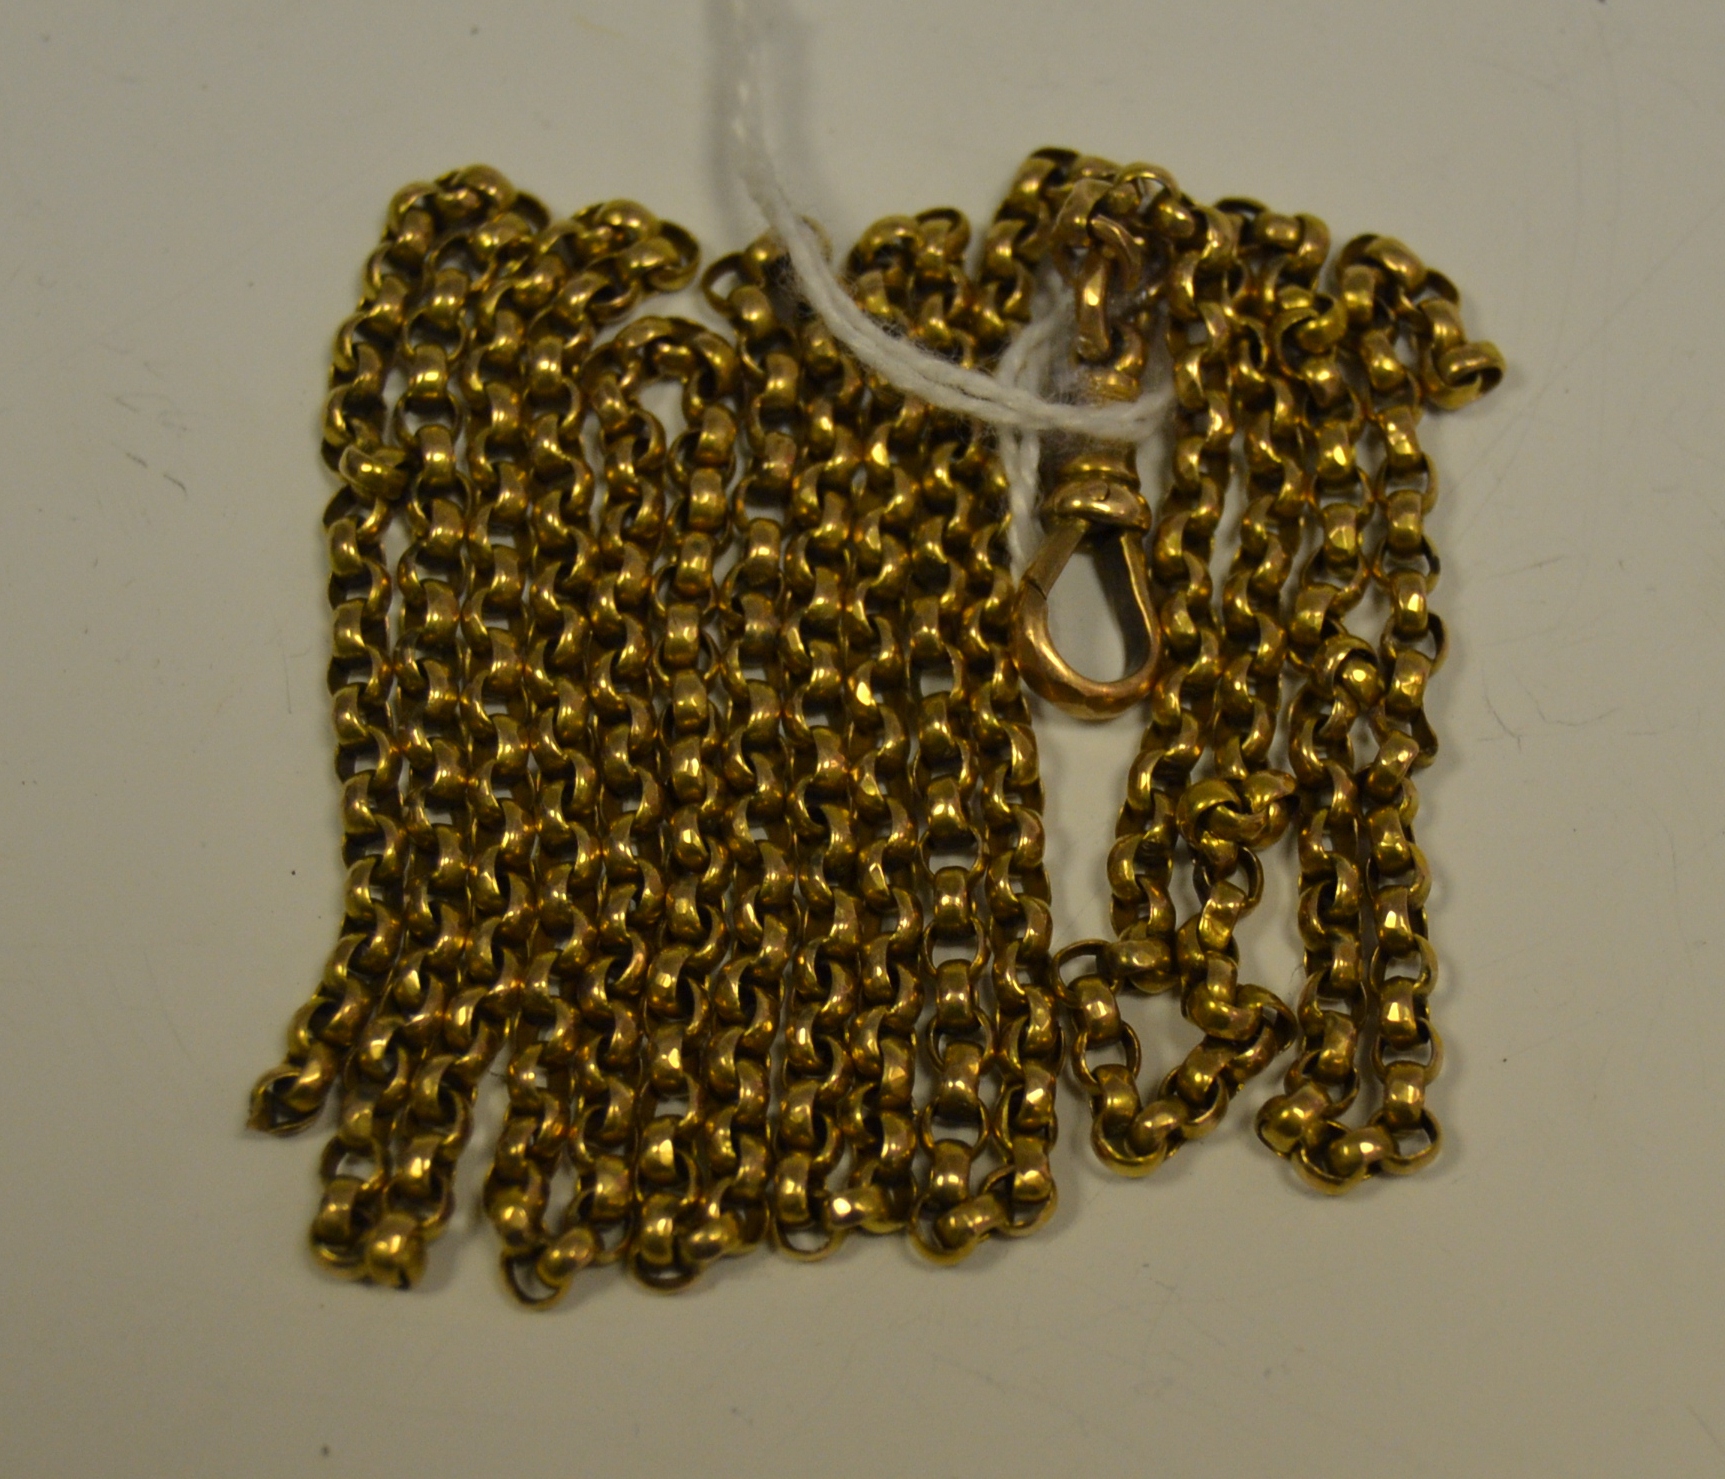 A 9ct gold muff chain, 12.